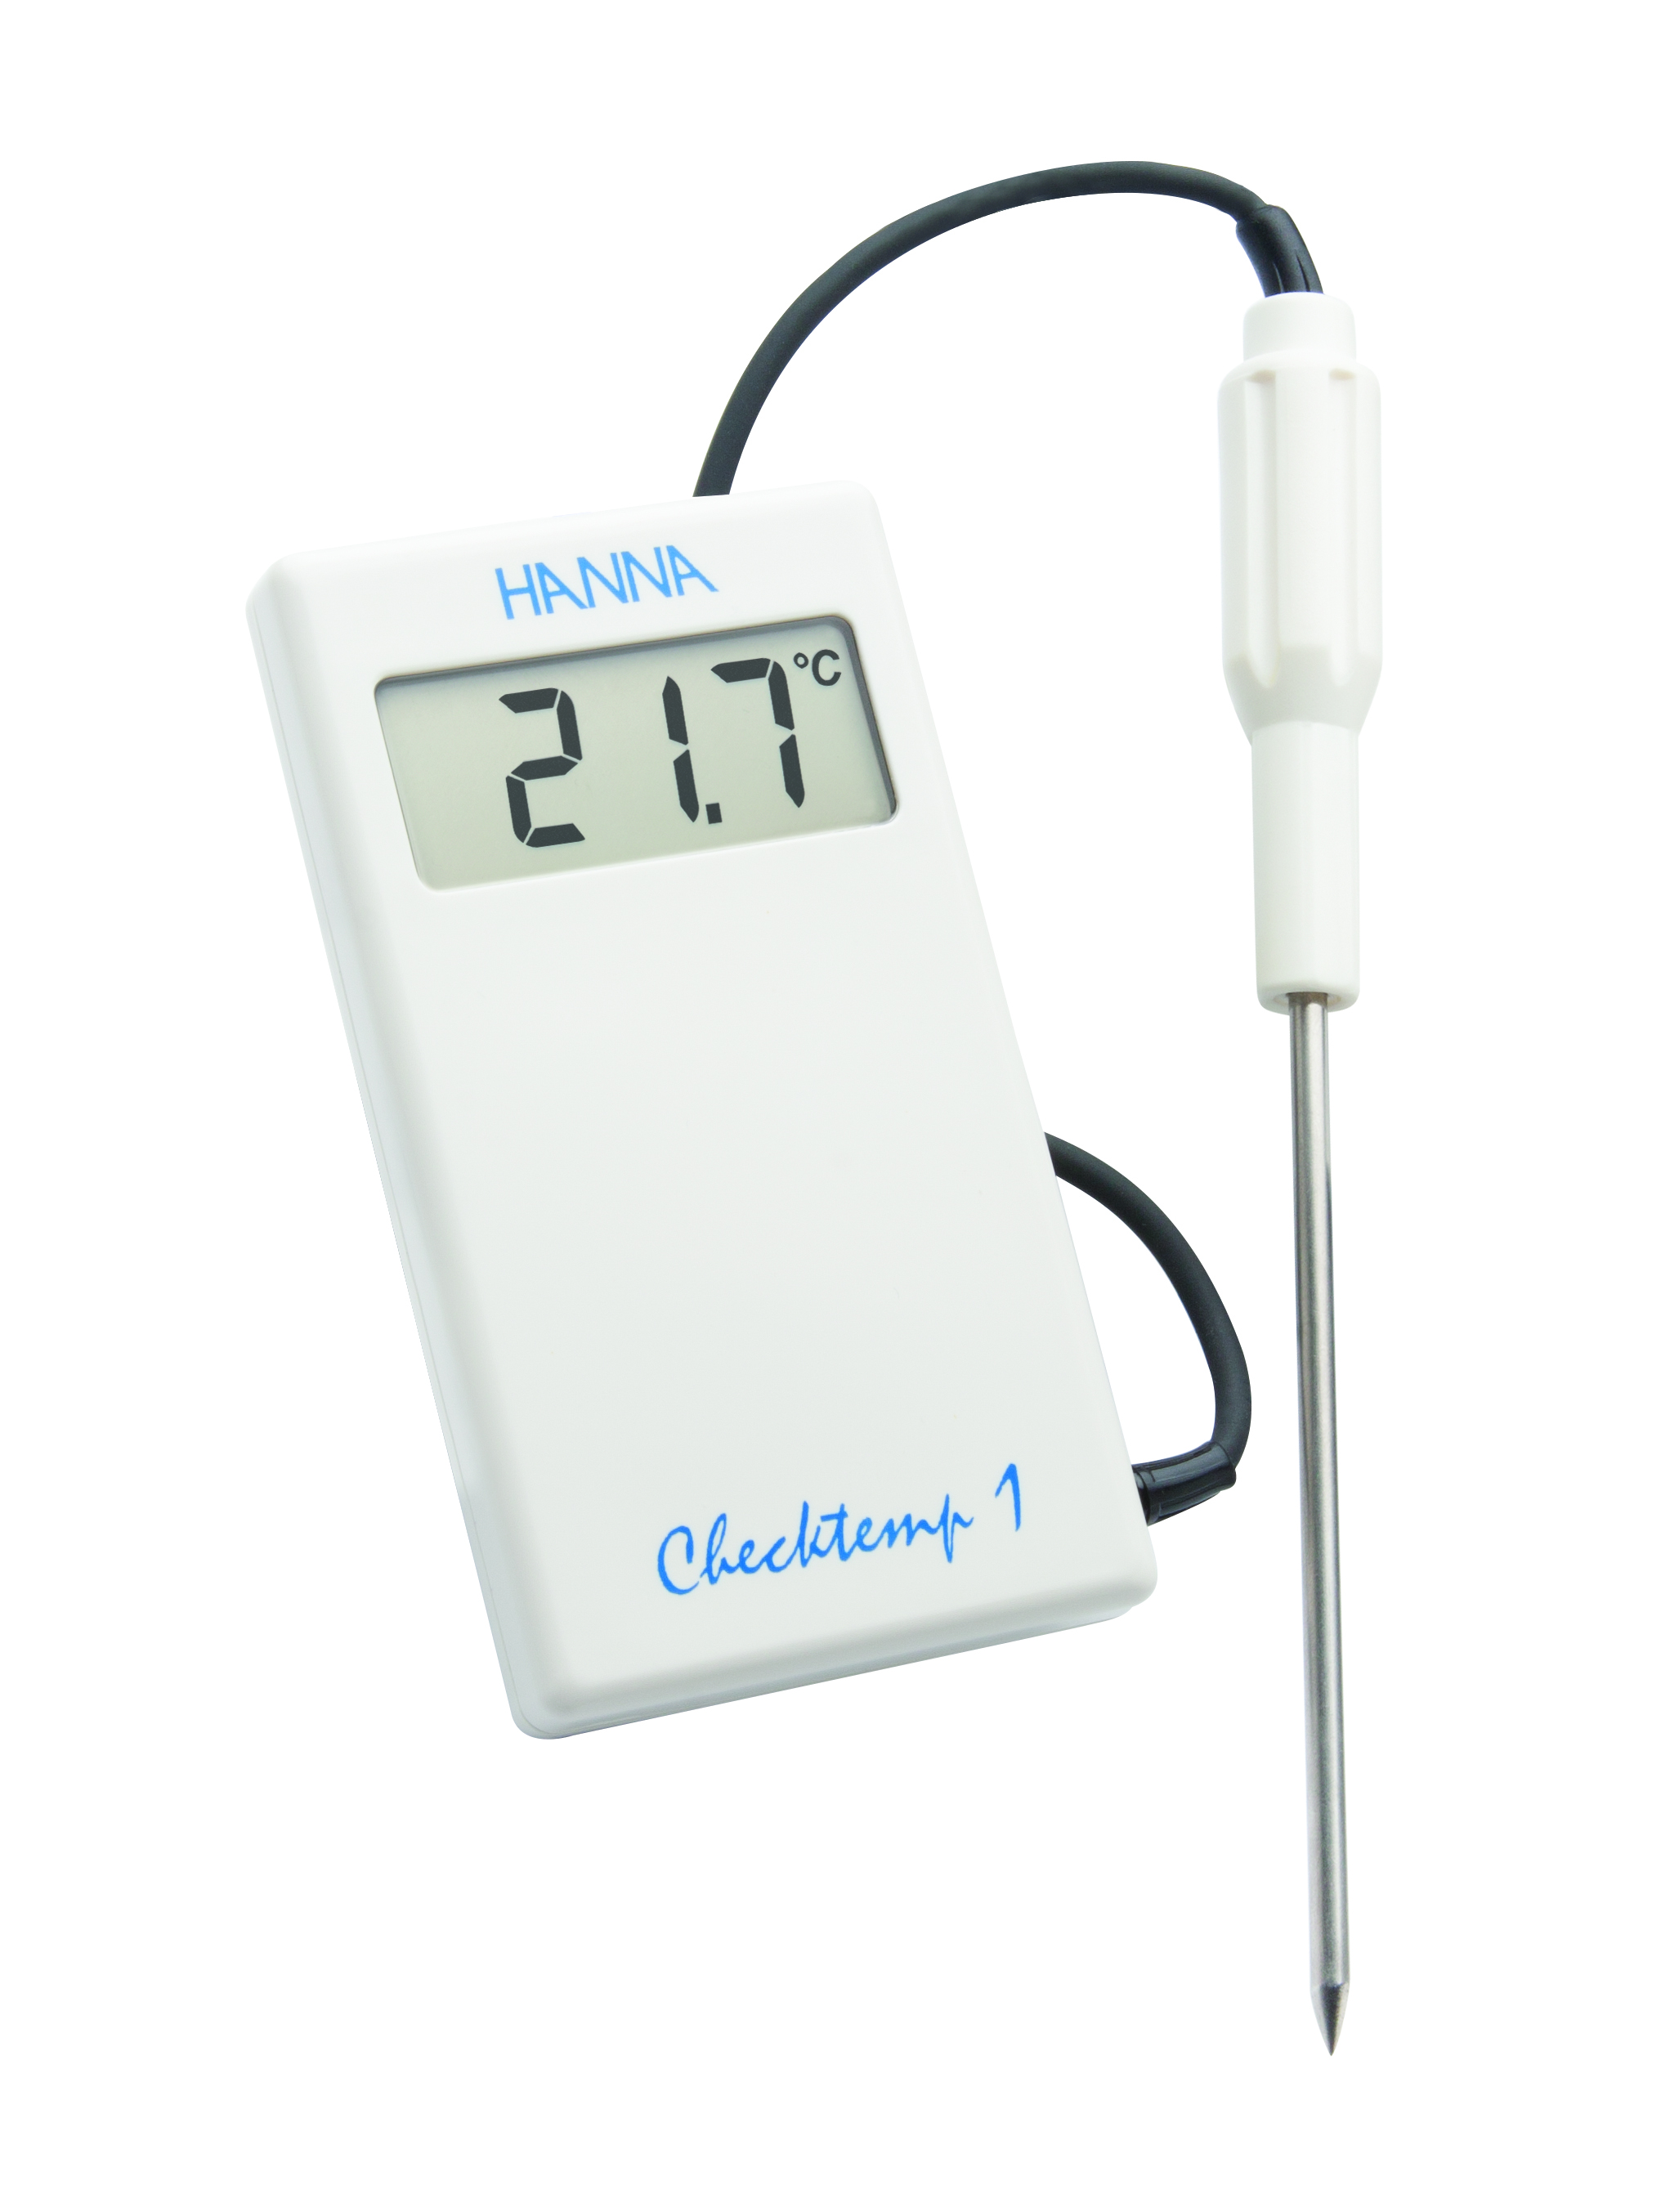 HI98509 Checktemp 1 digitales Thermometer.